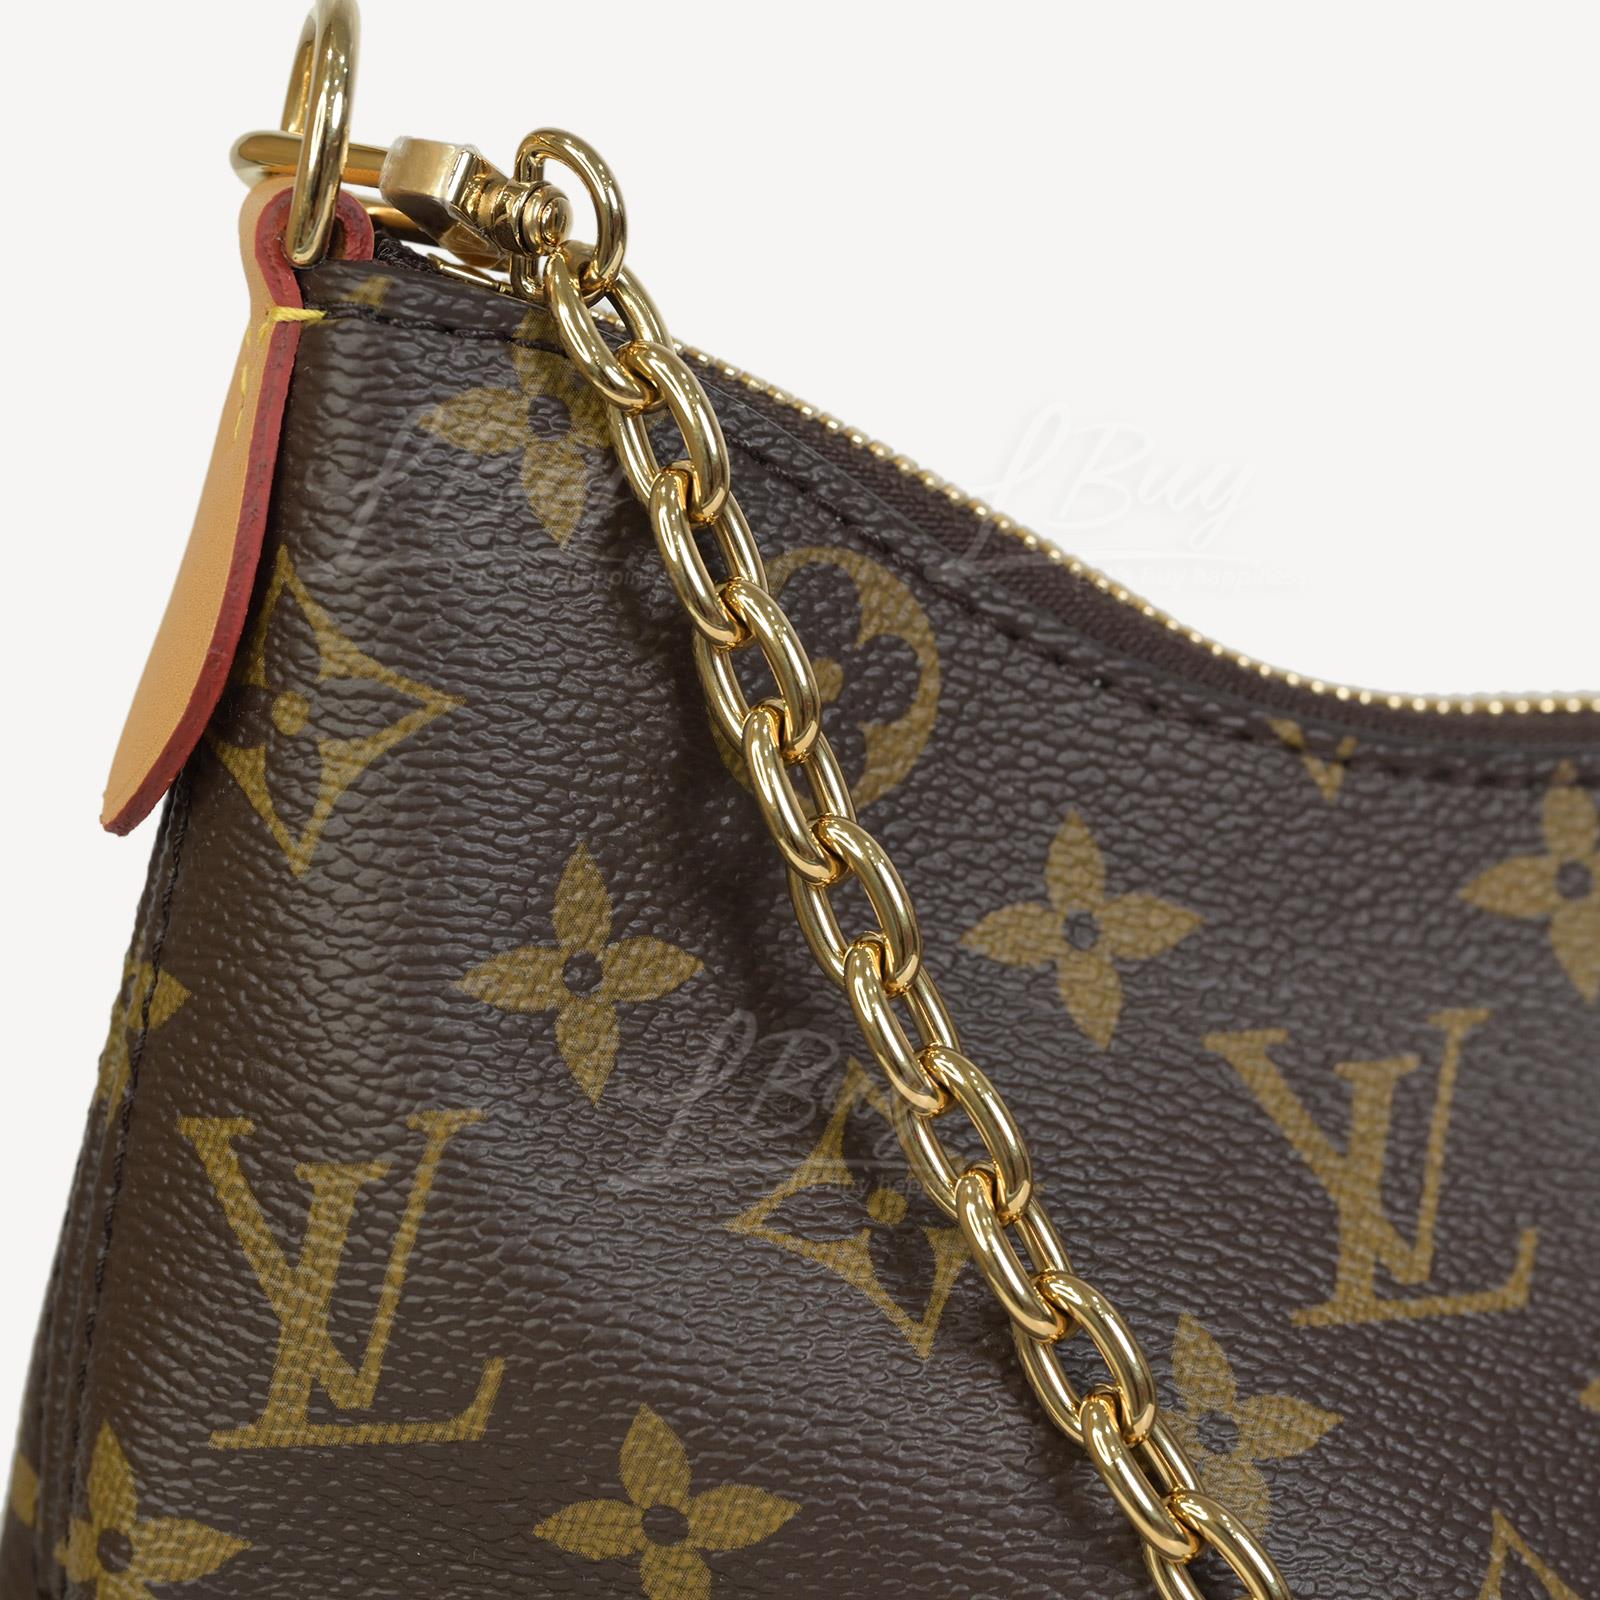 M45832 Louis Vuitton Monogram Boulogne Handbag